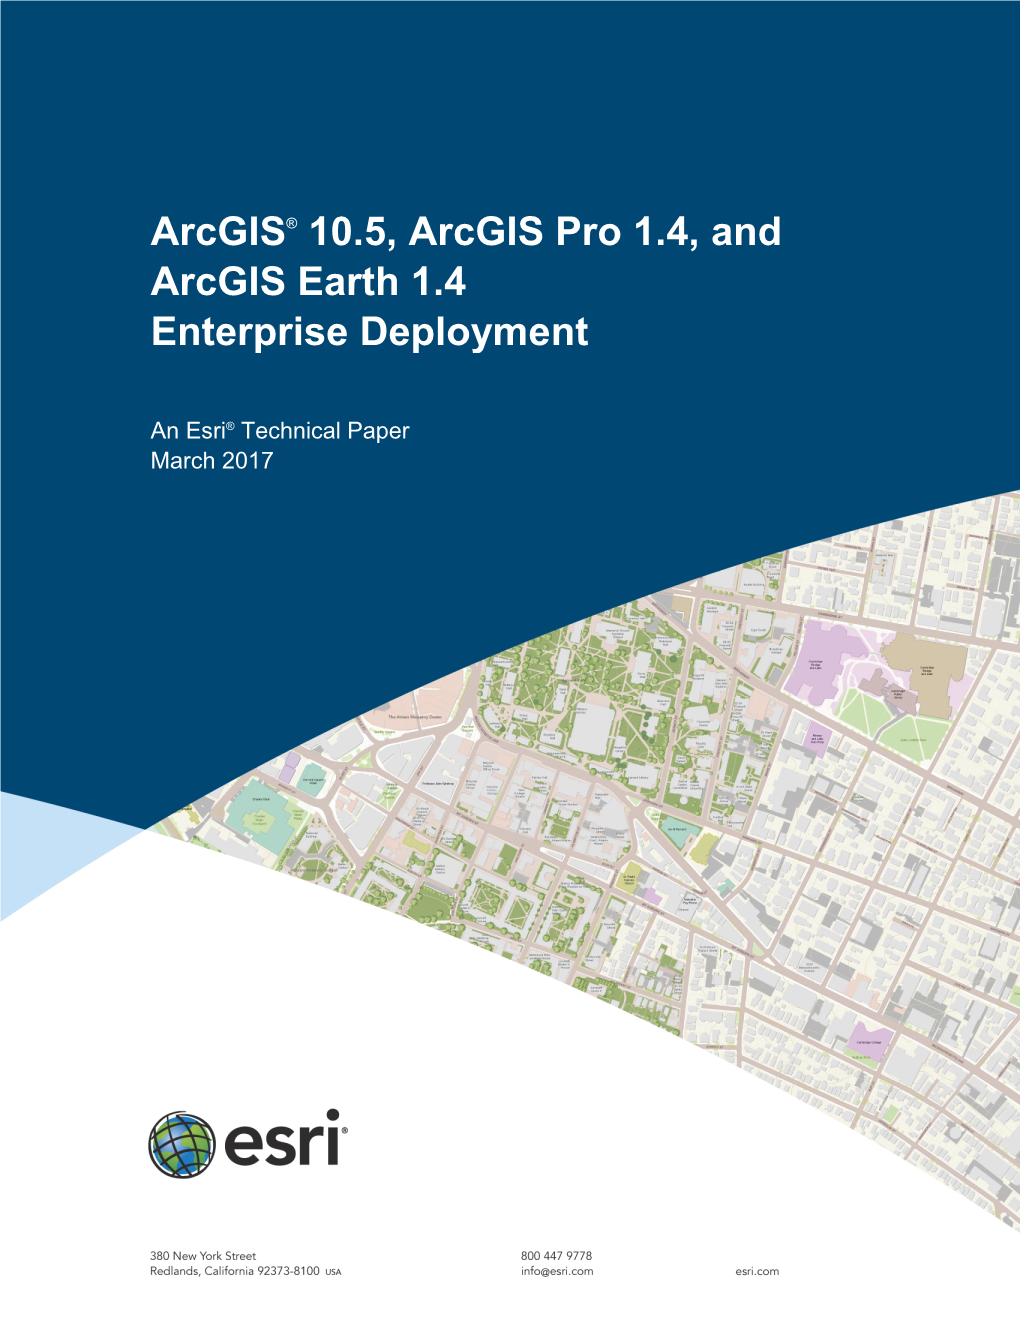 Arcgis® 10.5, Arcgis Pro 1.4, and Arcgis Earth 1.4 Enterprise Deployment